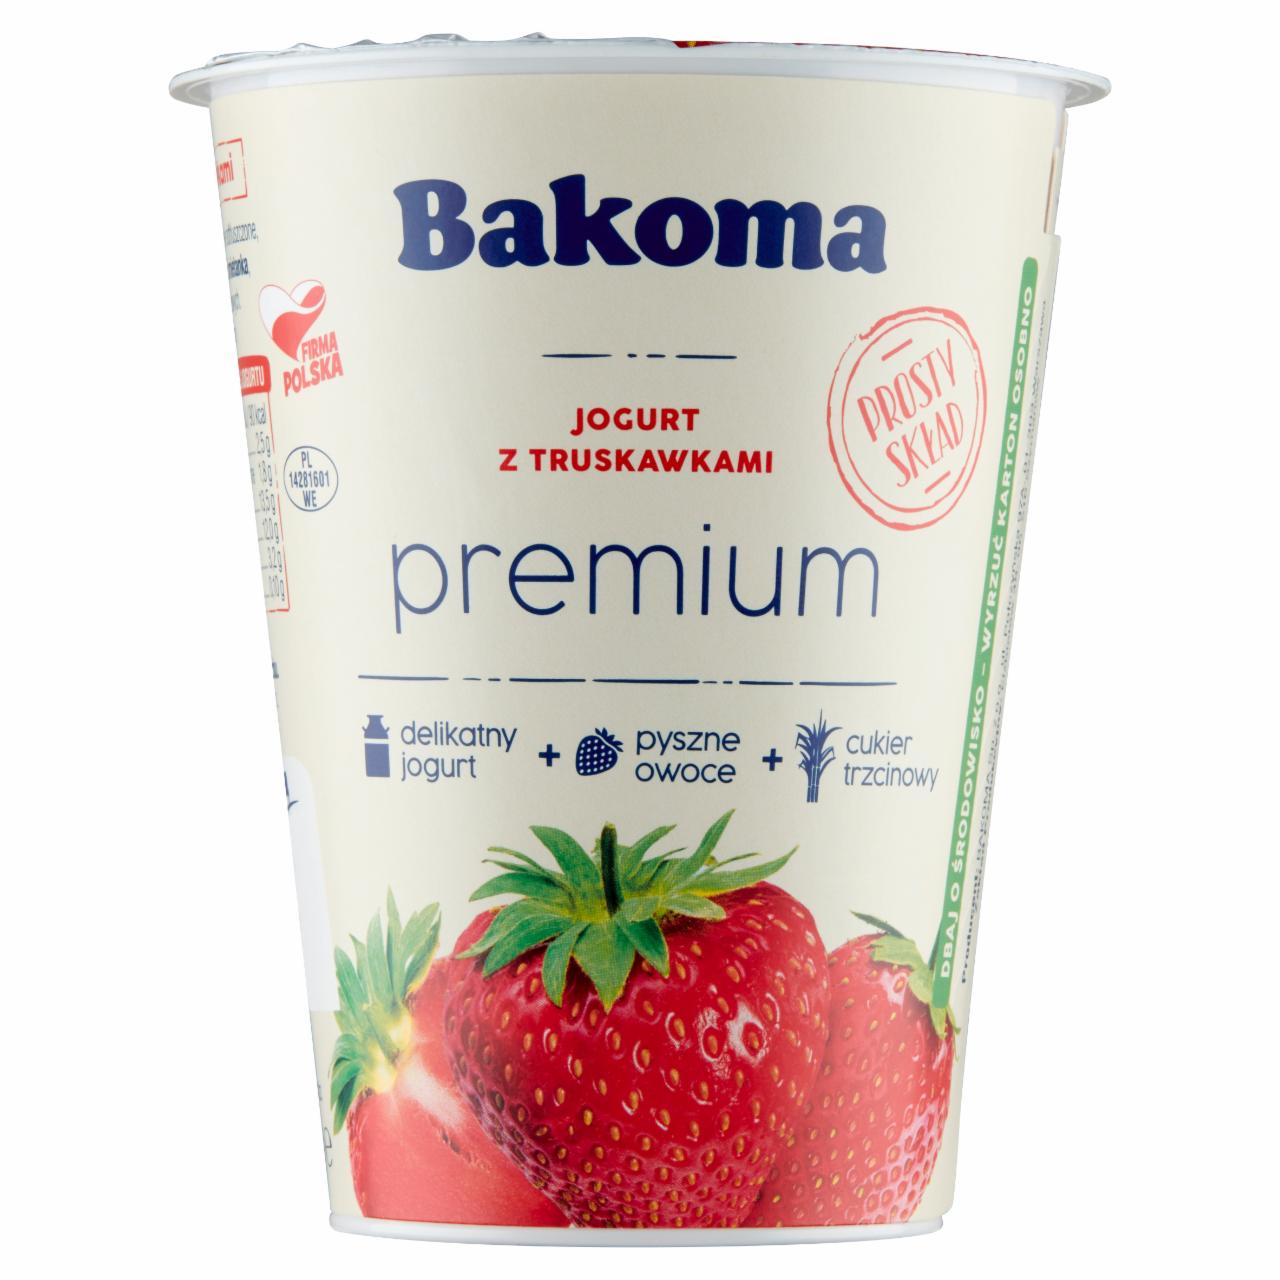 Zdjęcia - Bakoma Premium Jogurt z truskawkami 400 g